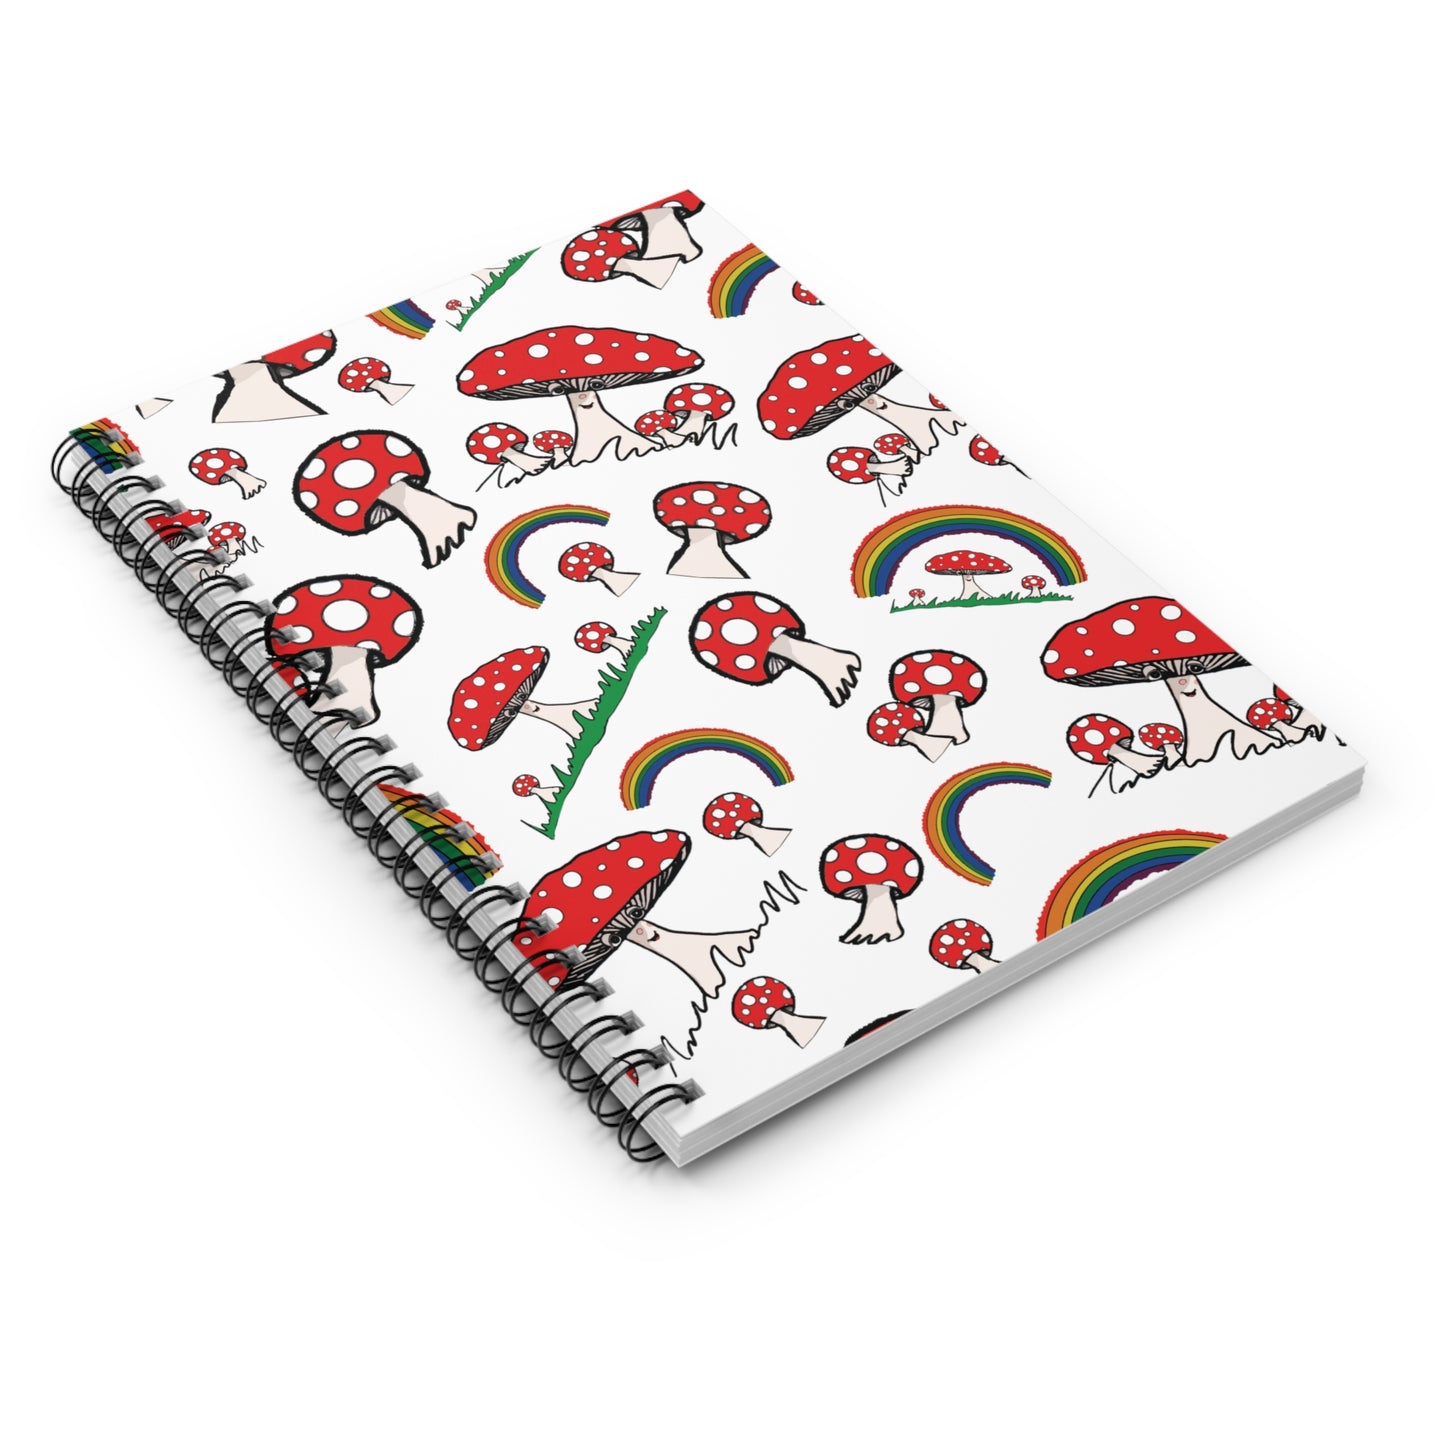 Amanita Mushroom Spiral Notebook - Ruled Line